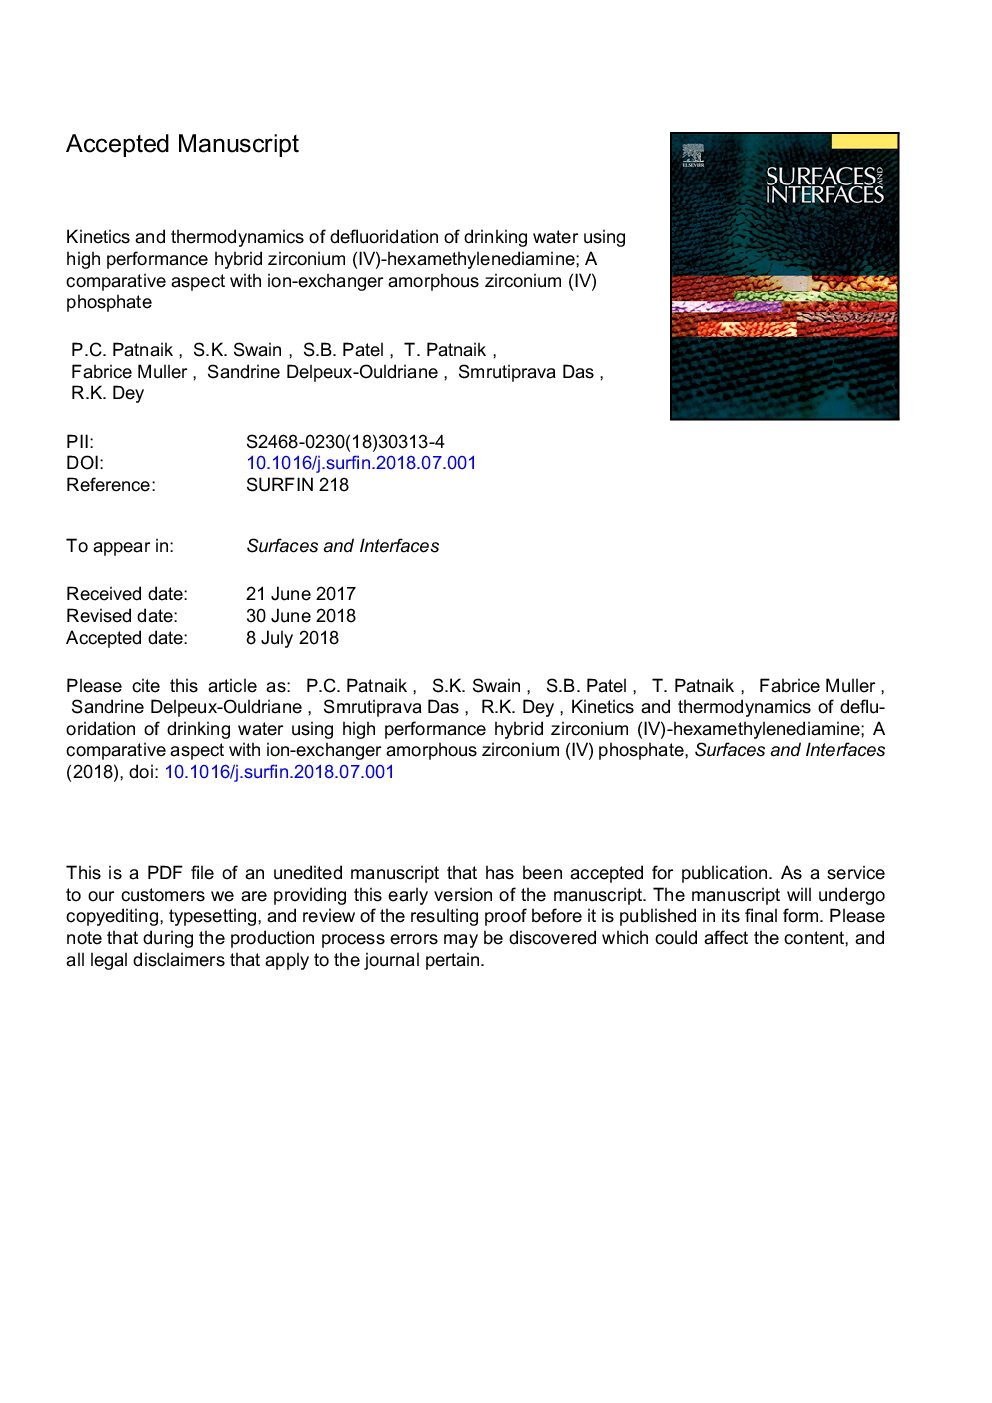 Kinetics and thermodynamics of defluoridation of drinking water using high performance hybrid zirconium (IV)-hexamethylenediamine: A comparative aspect with ion-exchanger amorphous zirconium (IV) phosphate